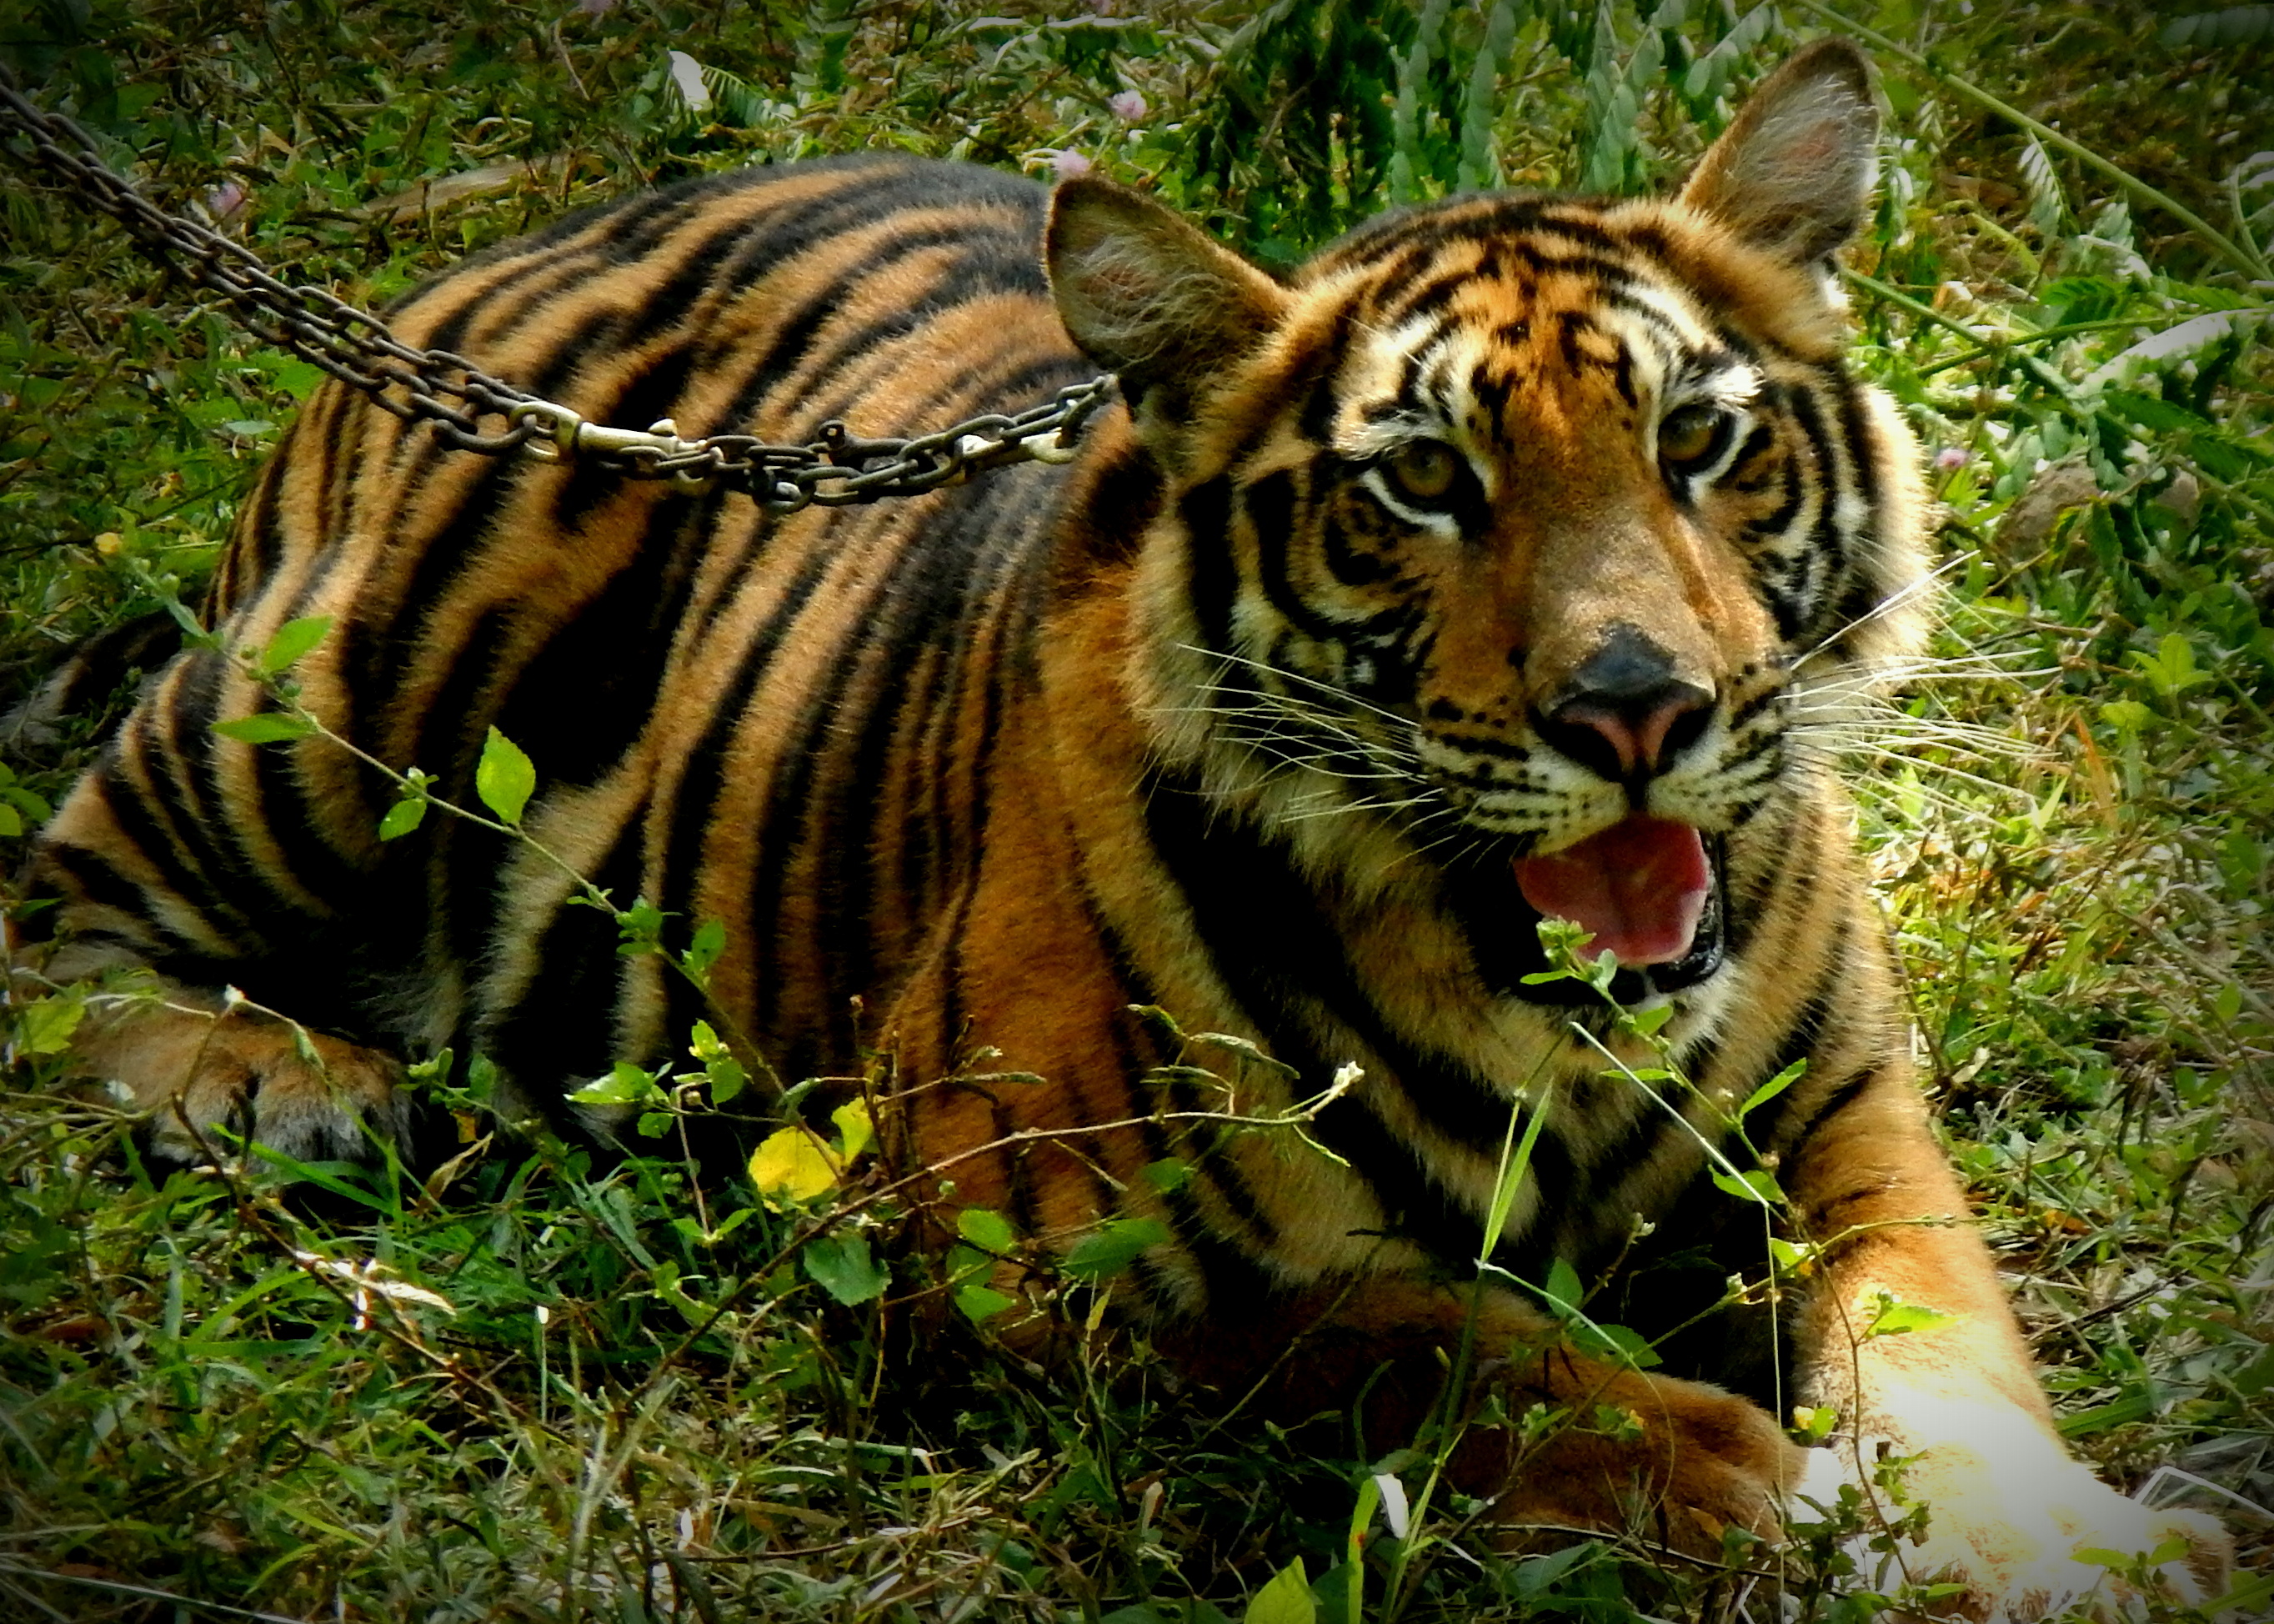 Yaya the tiger at the Safari Park Zoo, Kanchanaburi Thailand